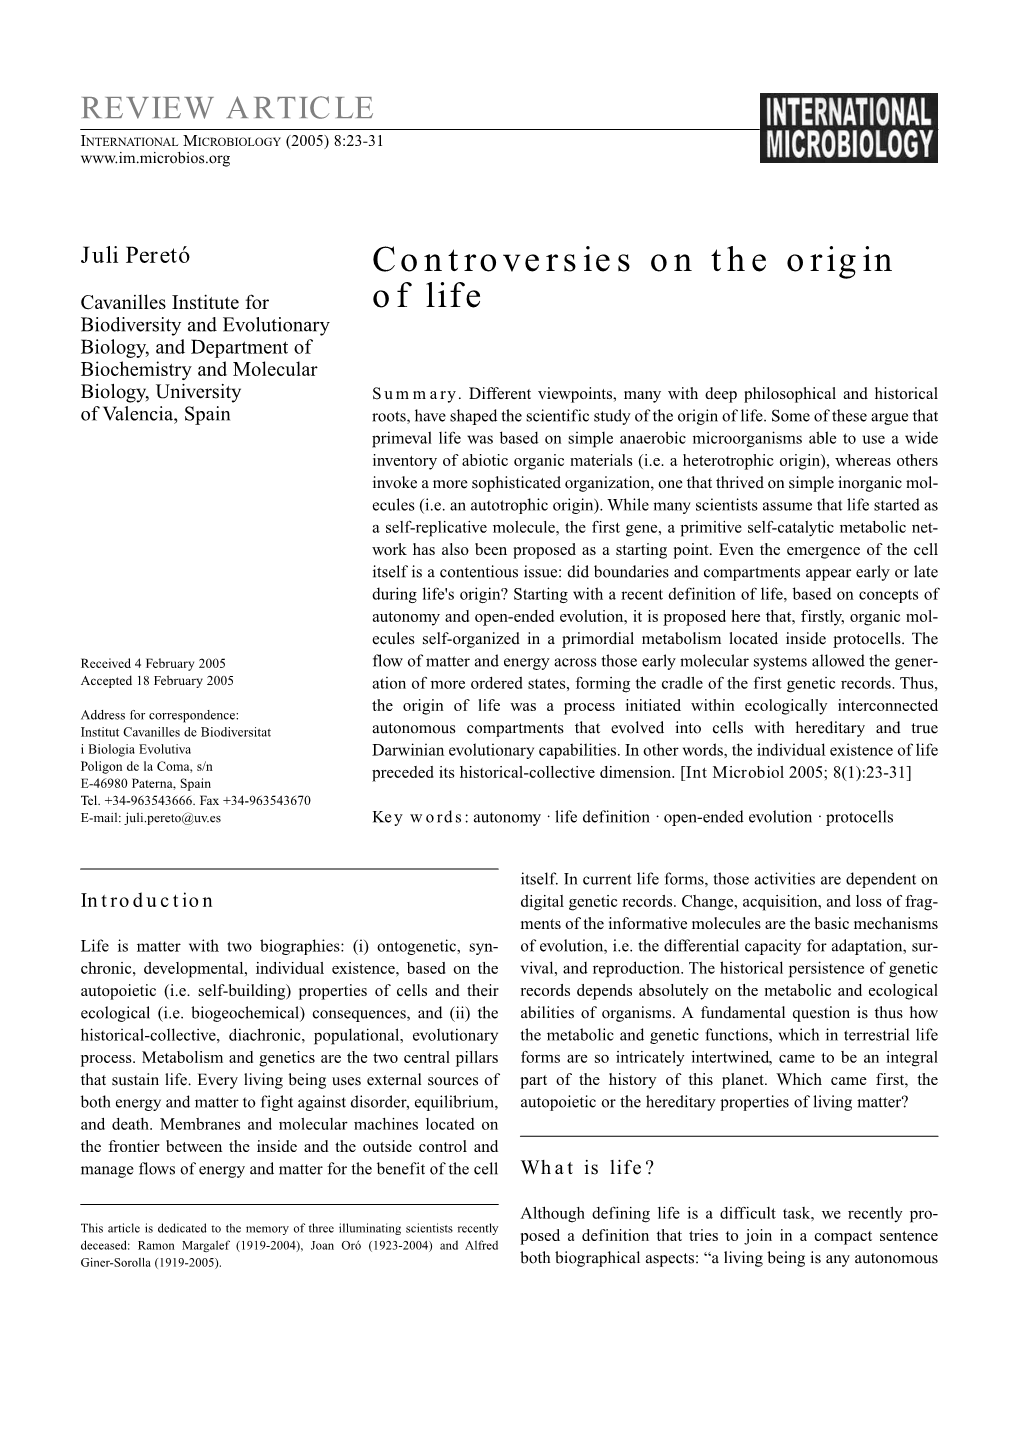 Controversies on the Origin of Life